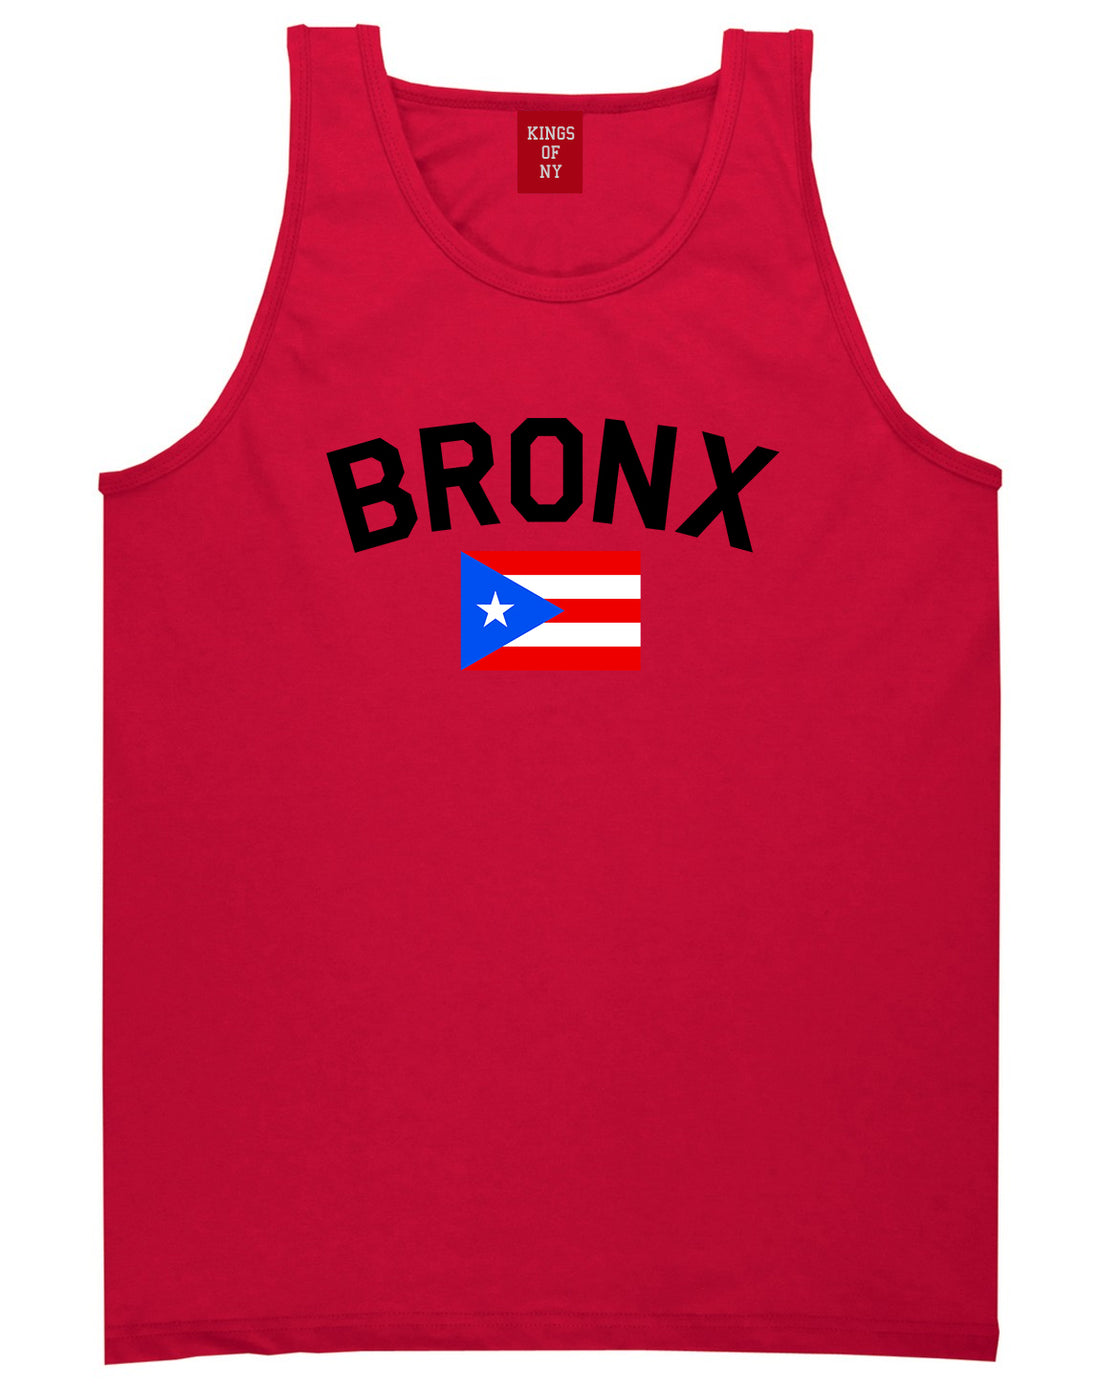 Bronx Puerto Rico Flag Mens Tank Top T-Shirt Red